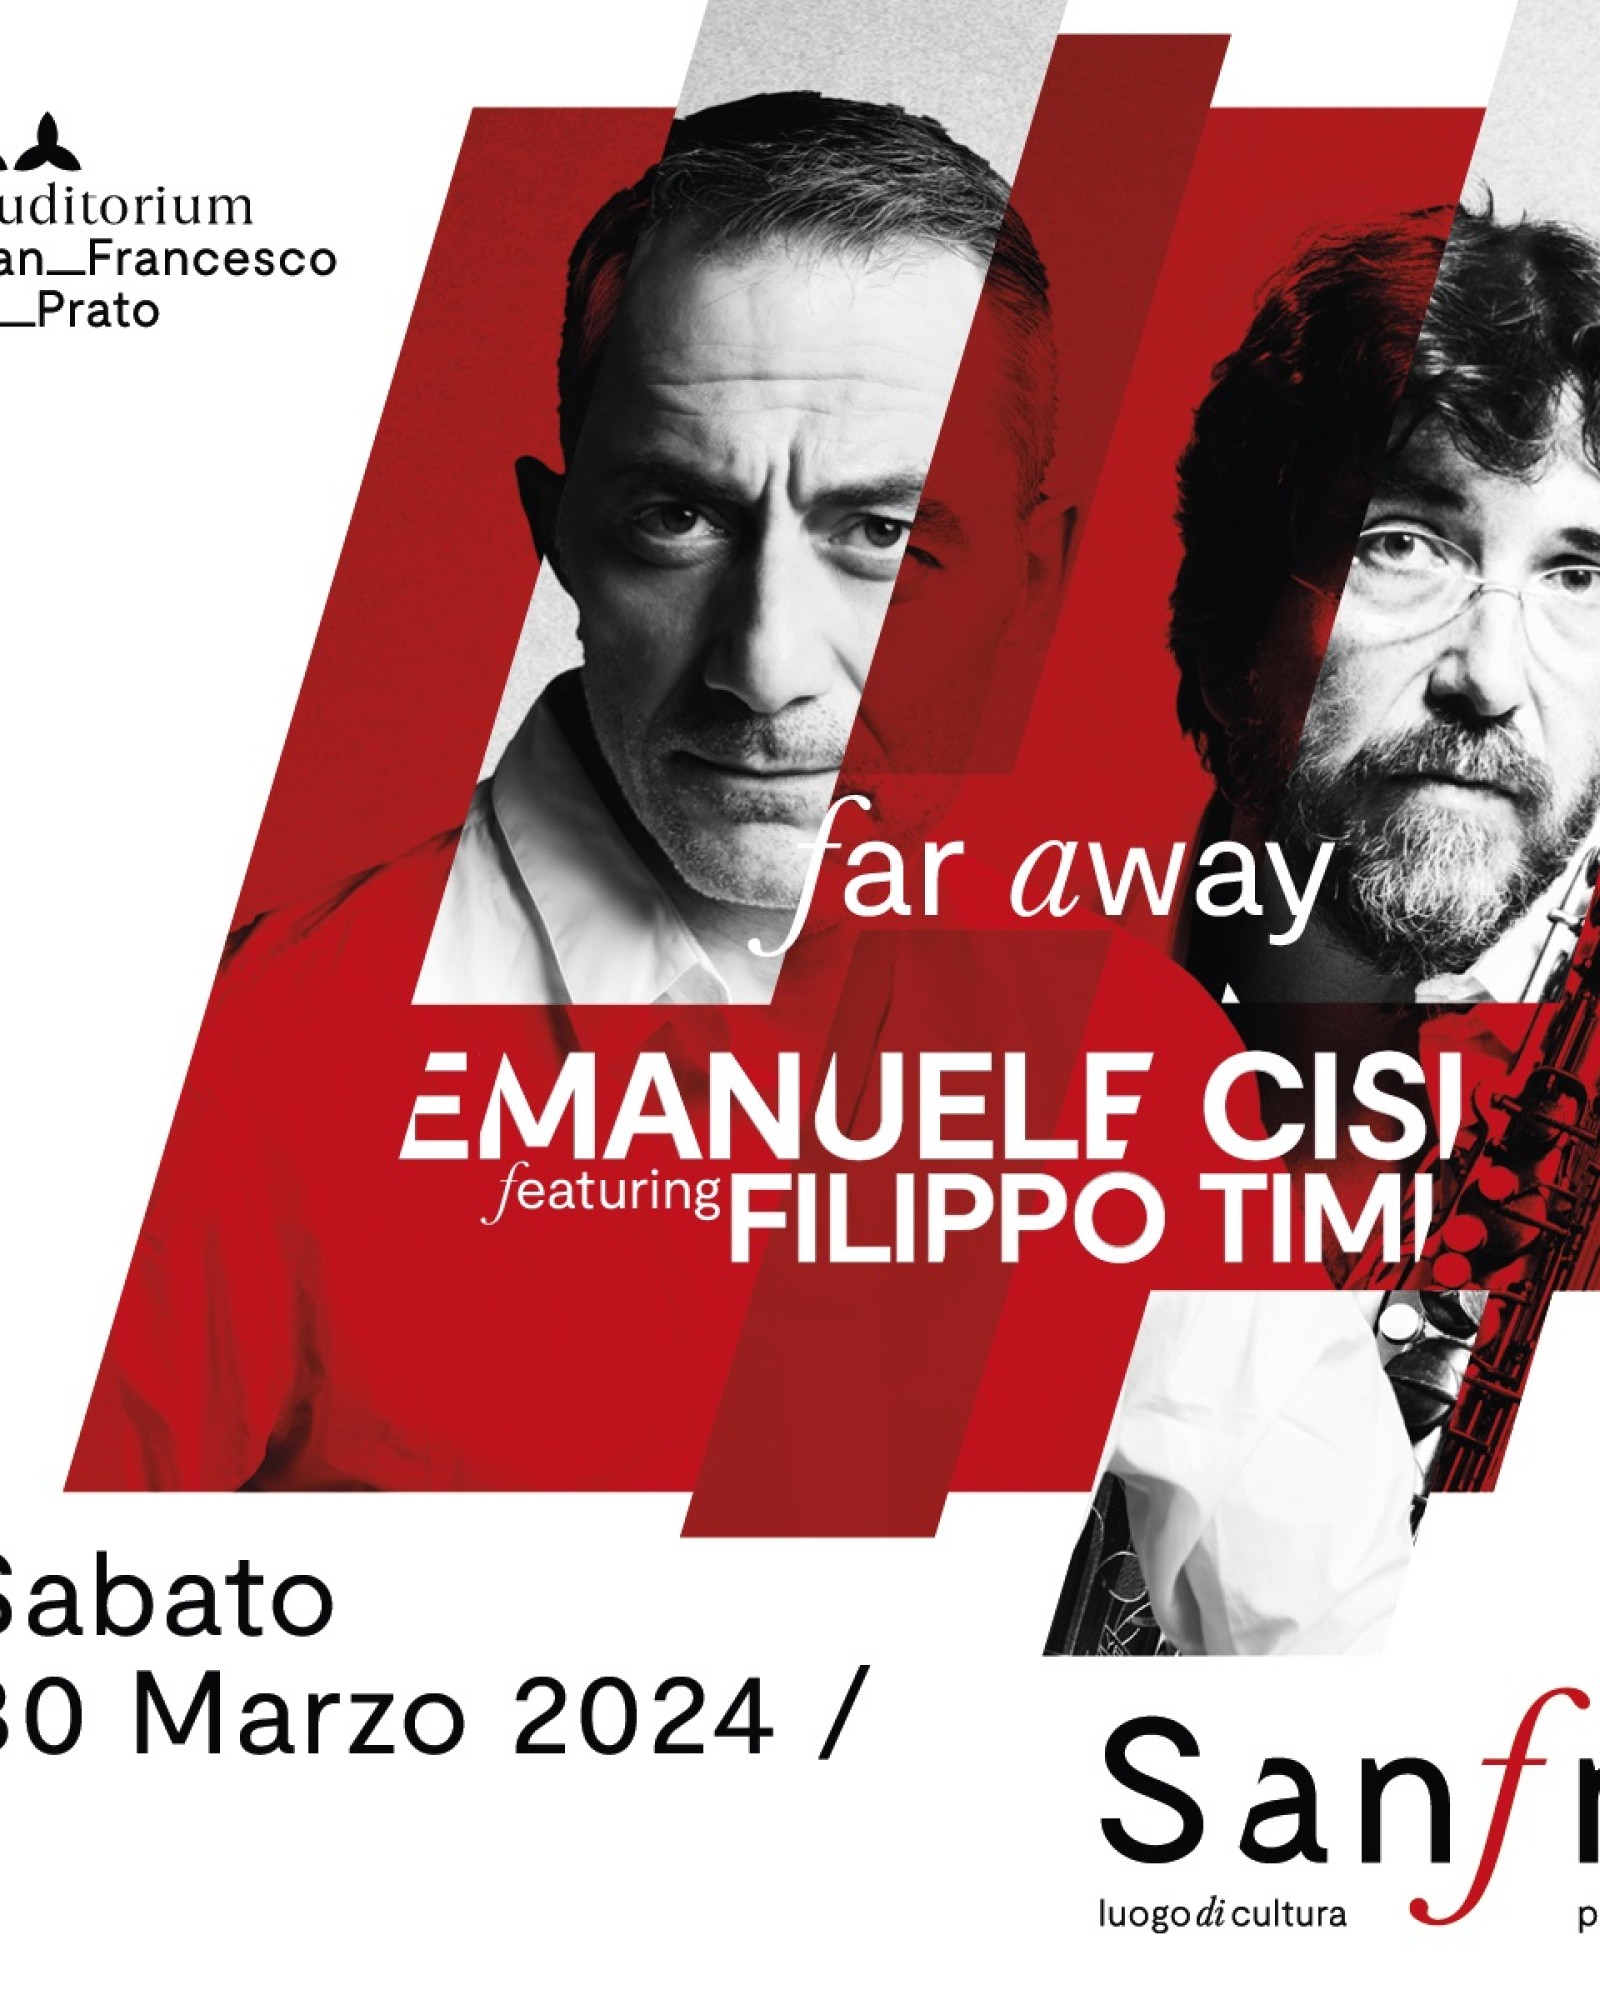 EMANUELE CISI featuring FILIPPO TIMI - Far Away - Perugia 2024